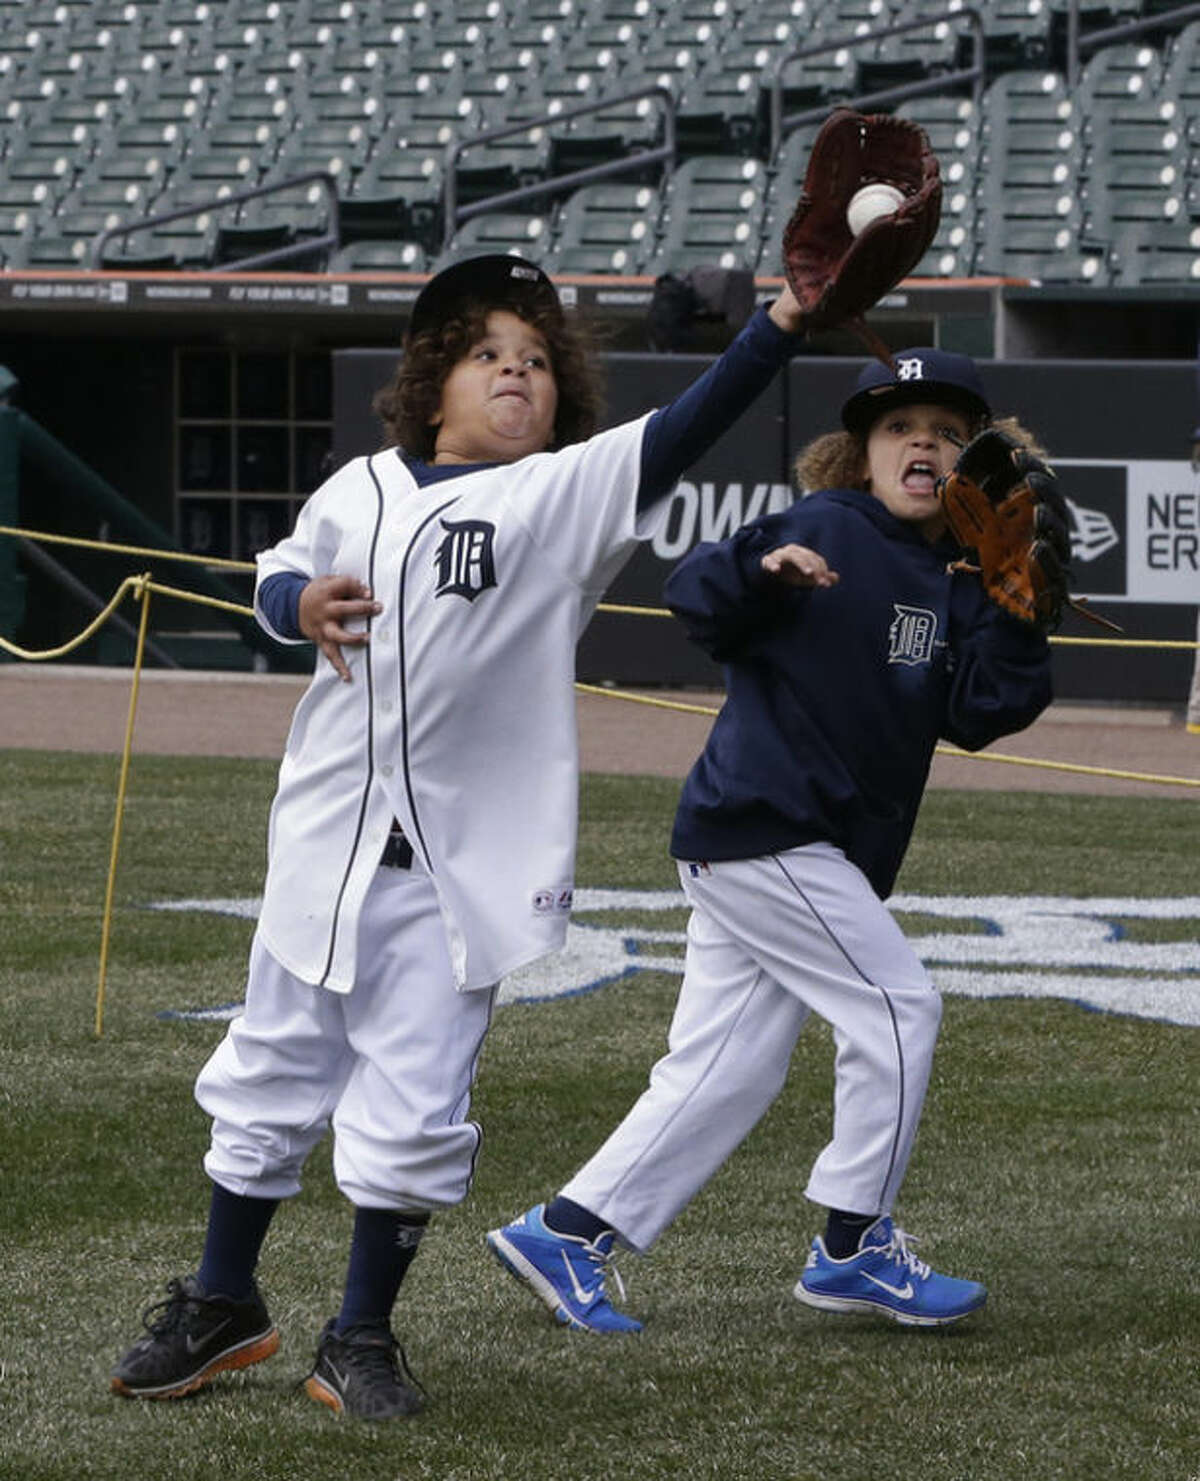 MLB Detroit Tigers Prince Fielder Baseball Jersey / Mens Small 